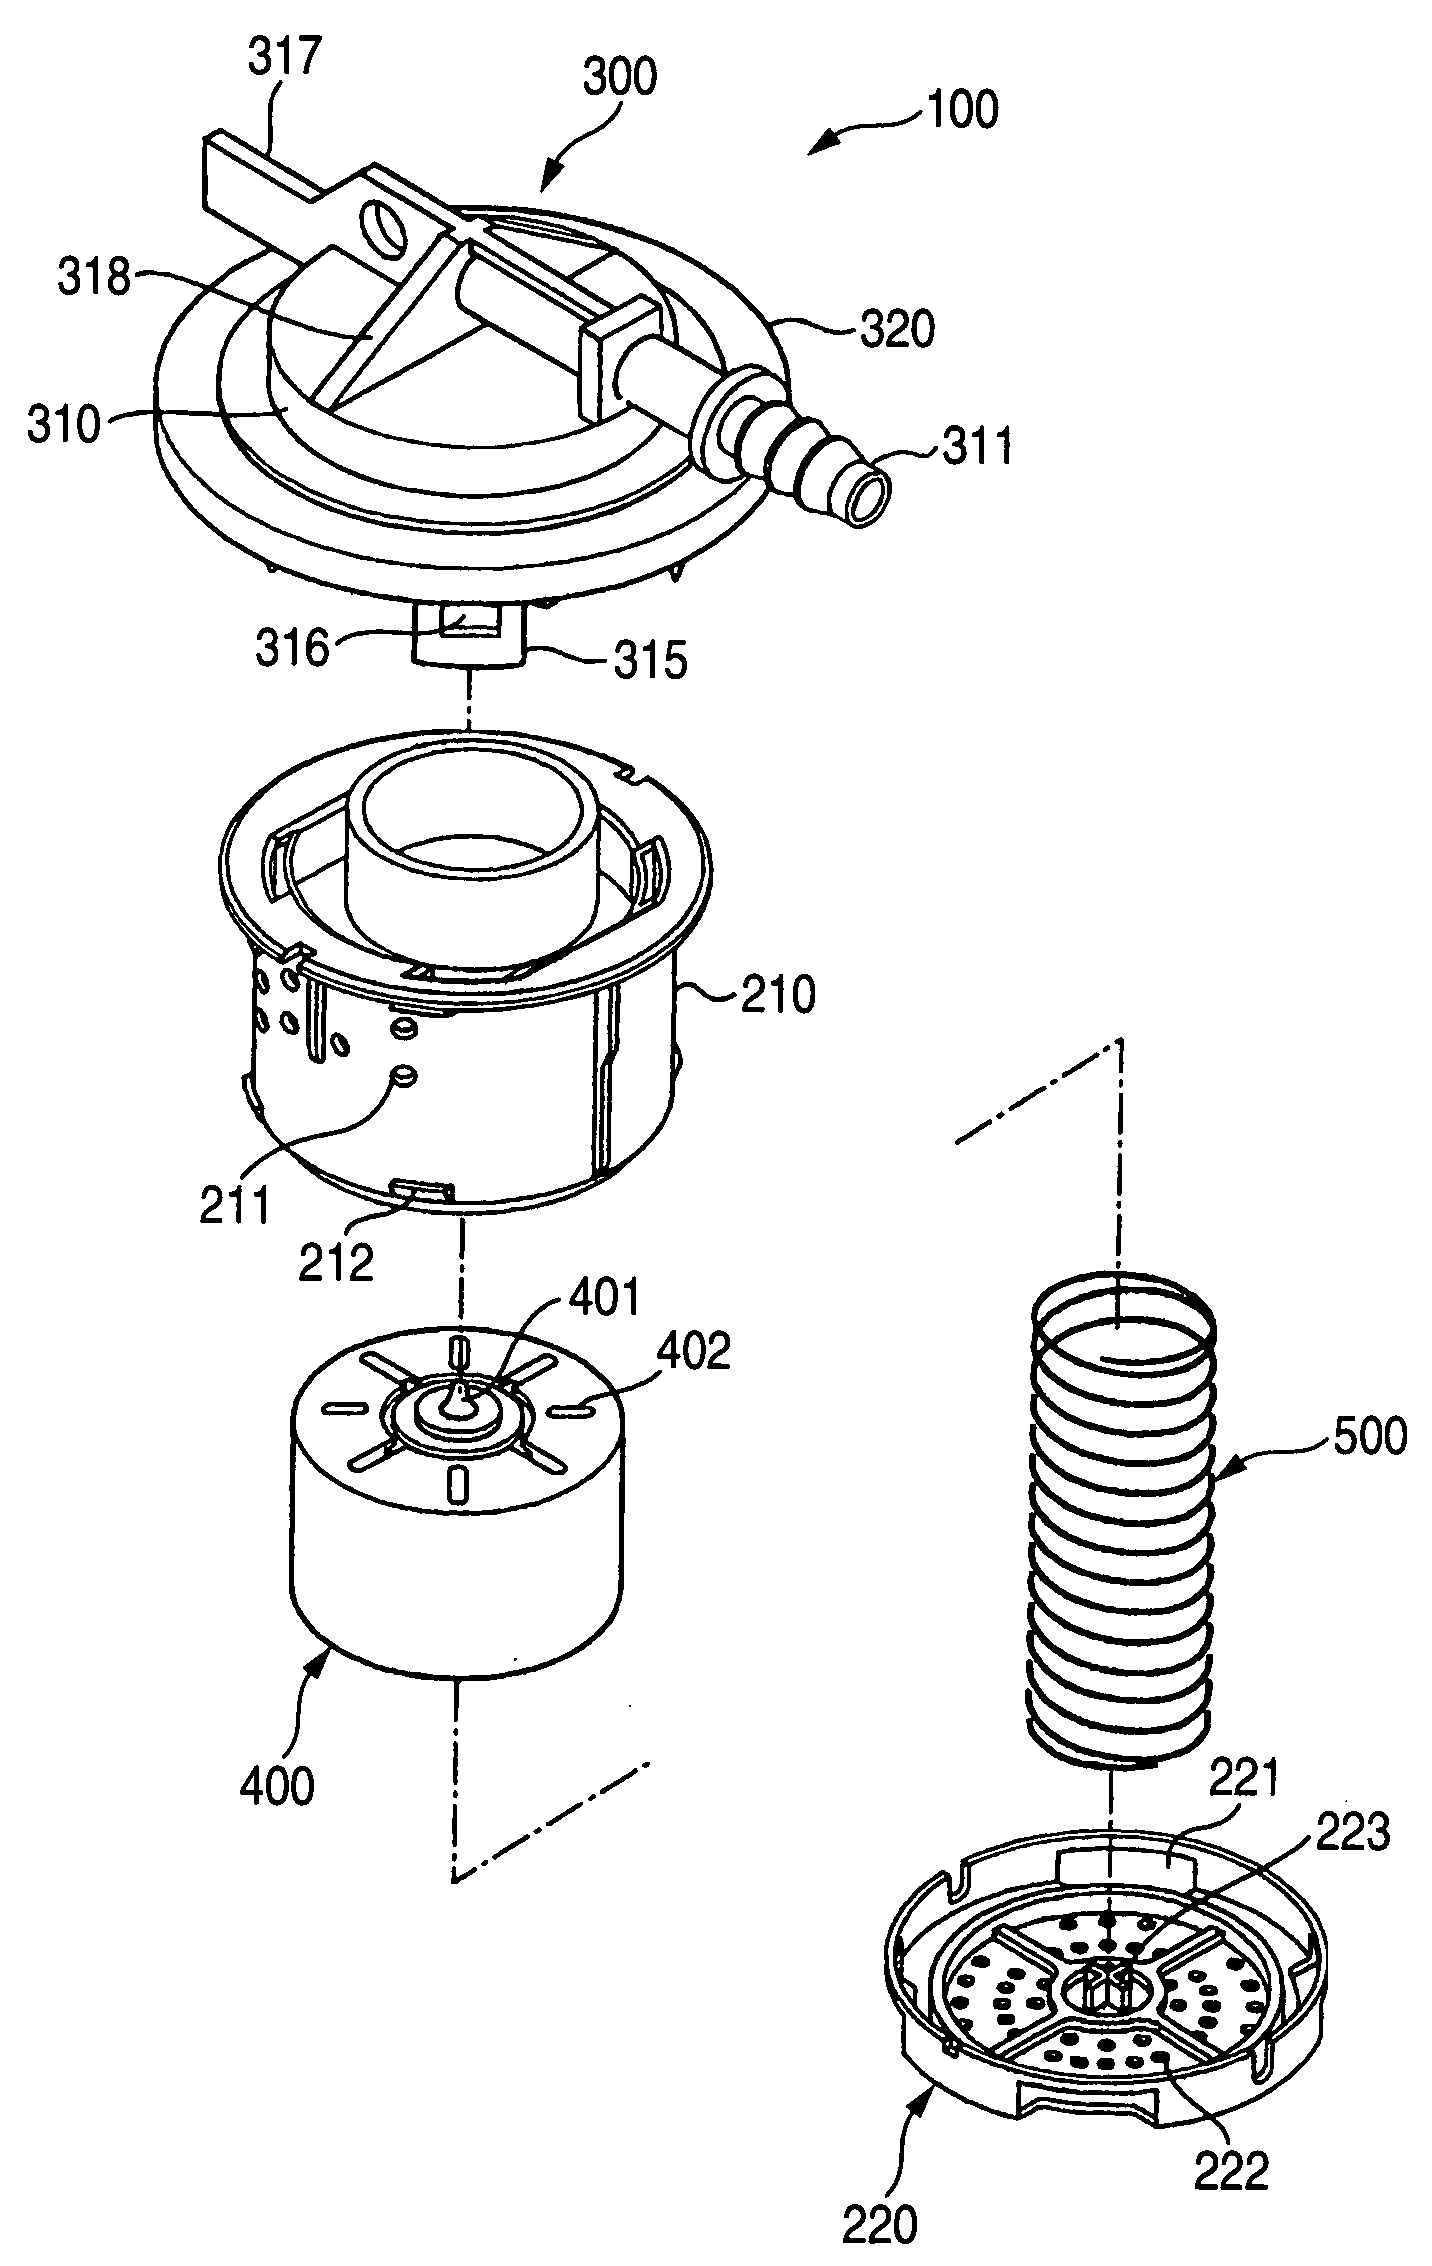 Method for manufacturing float valve apparatus